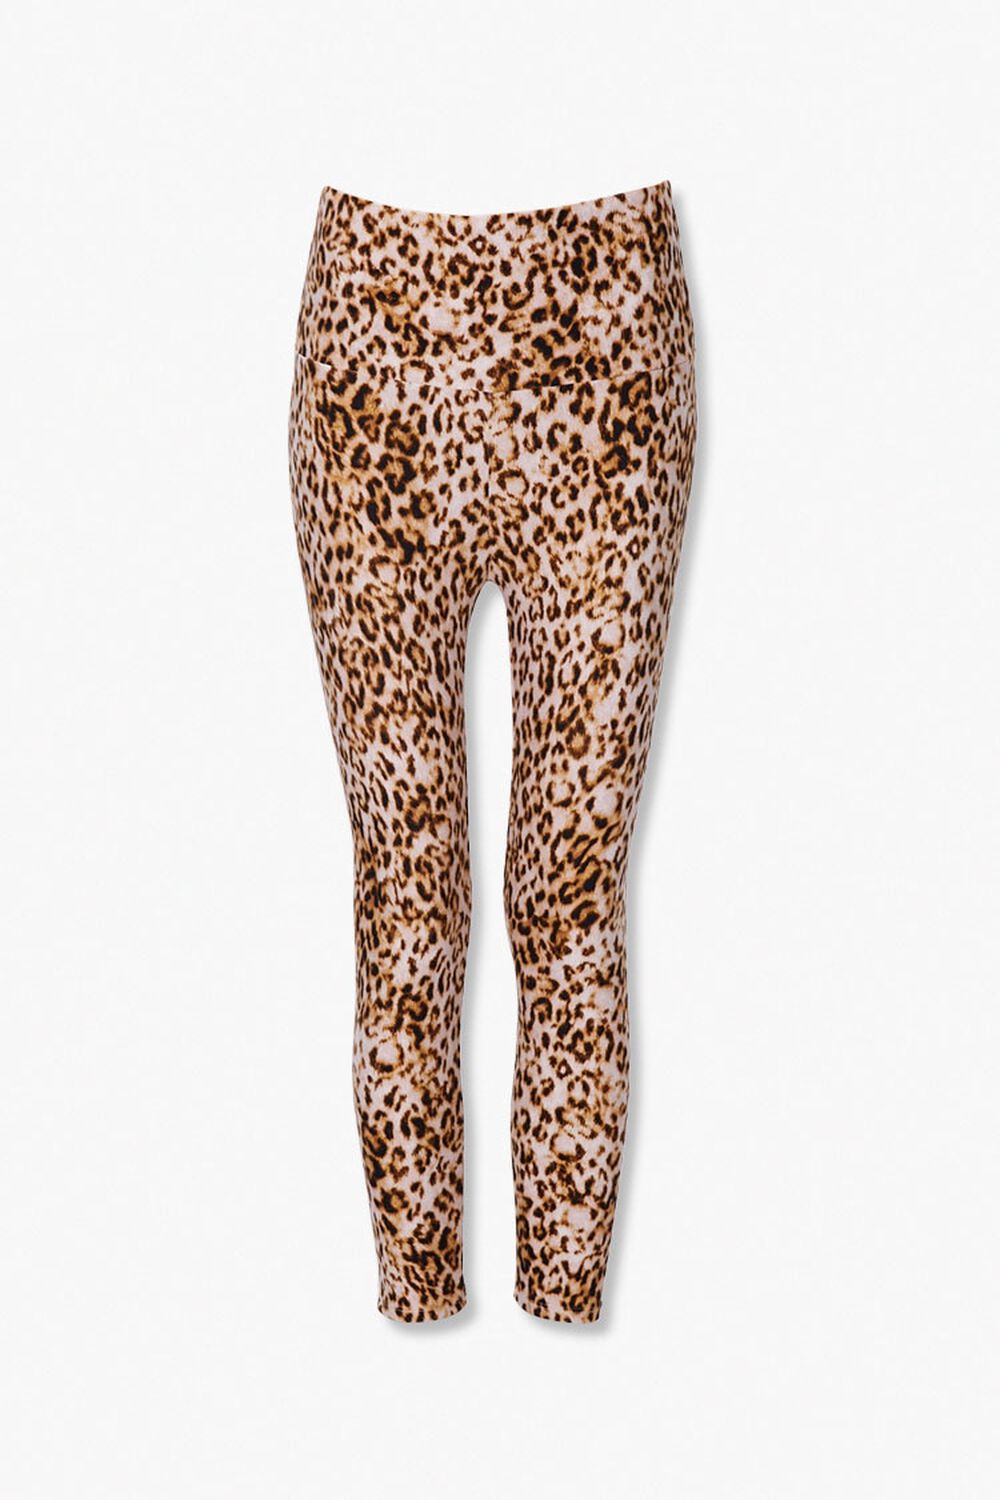 BROWN/MULTI Leopard Print Skinny Pants, image 1